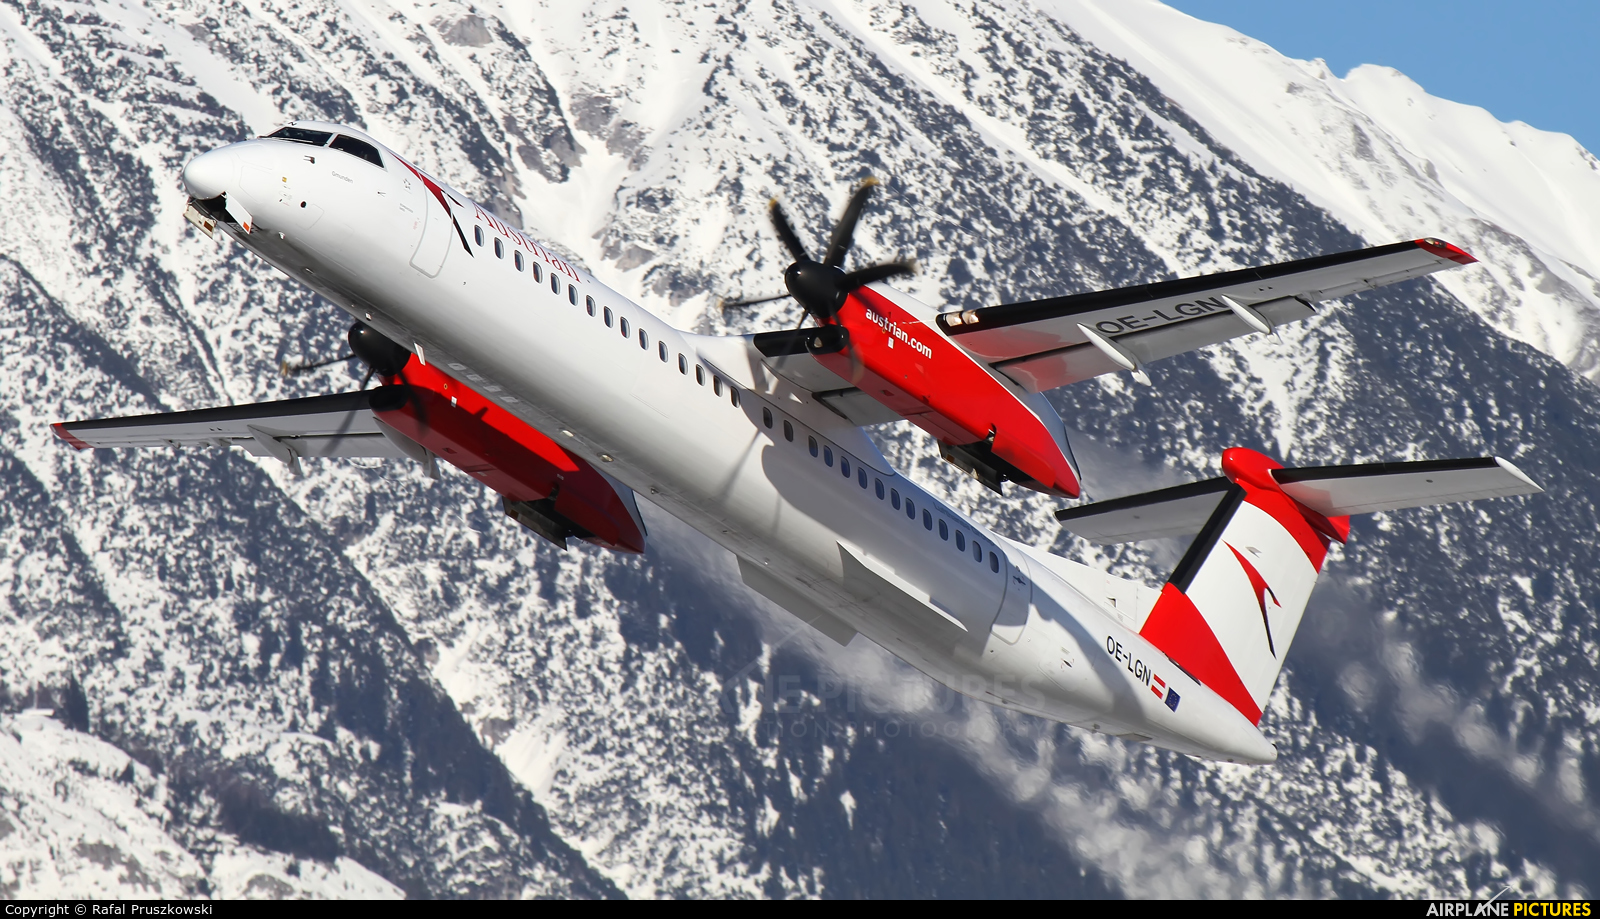 Austrian Airlines/Arrows/Tyrolean OE-LGN aircraft at Innsbruck